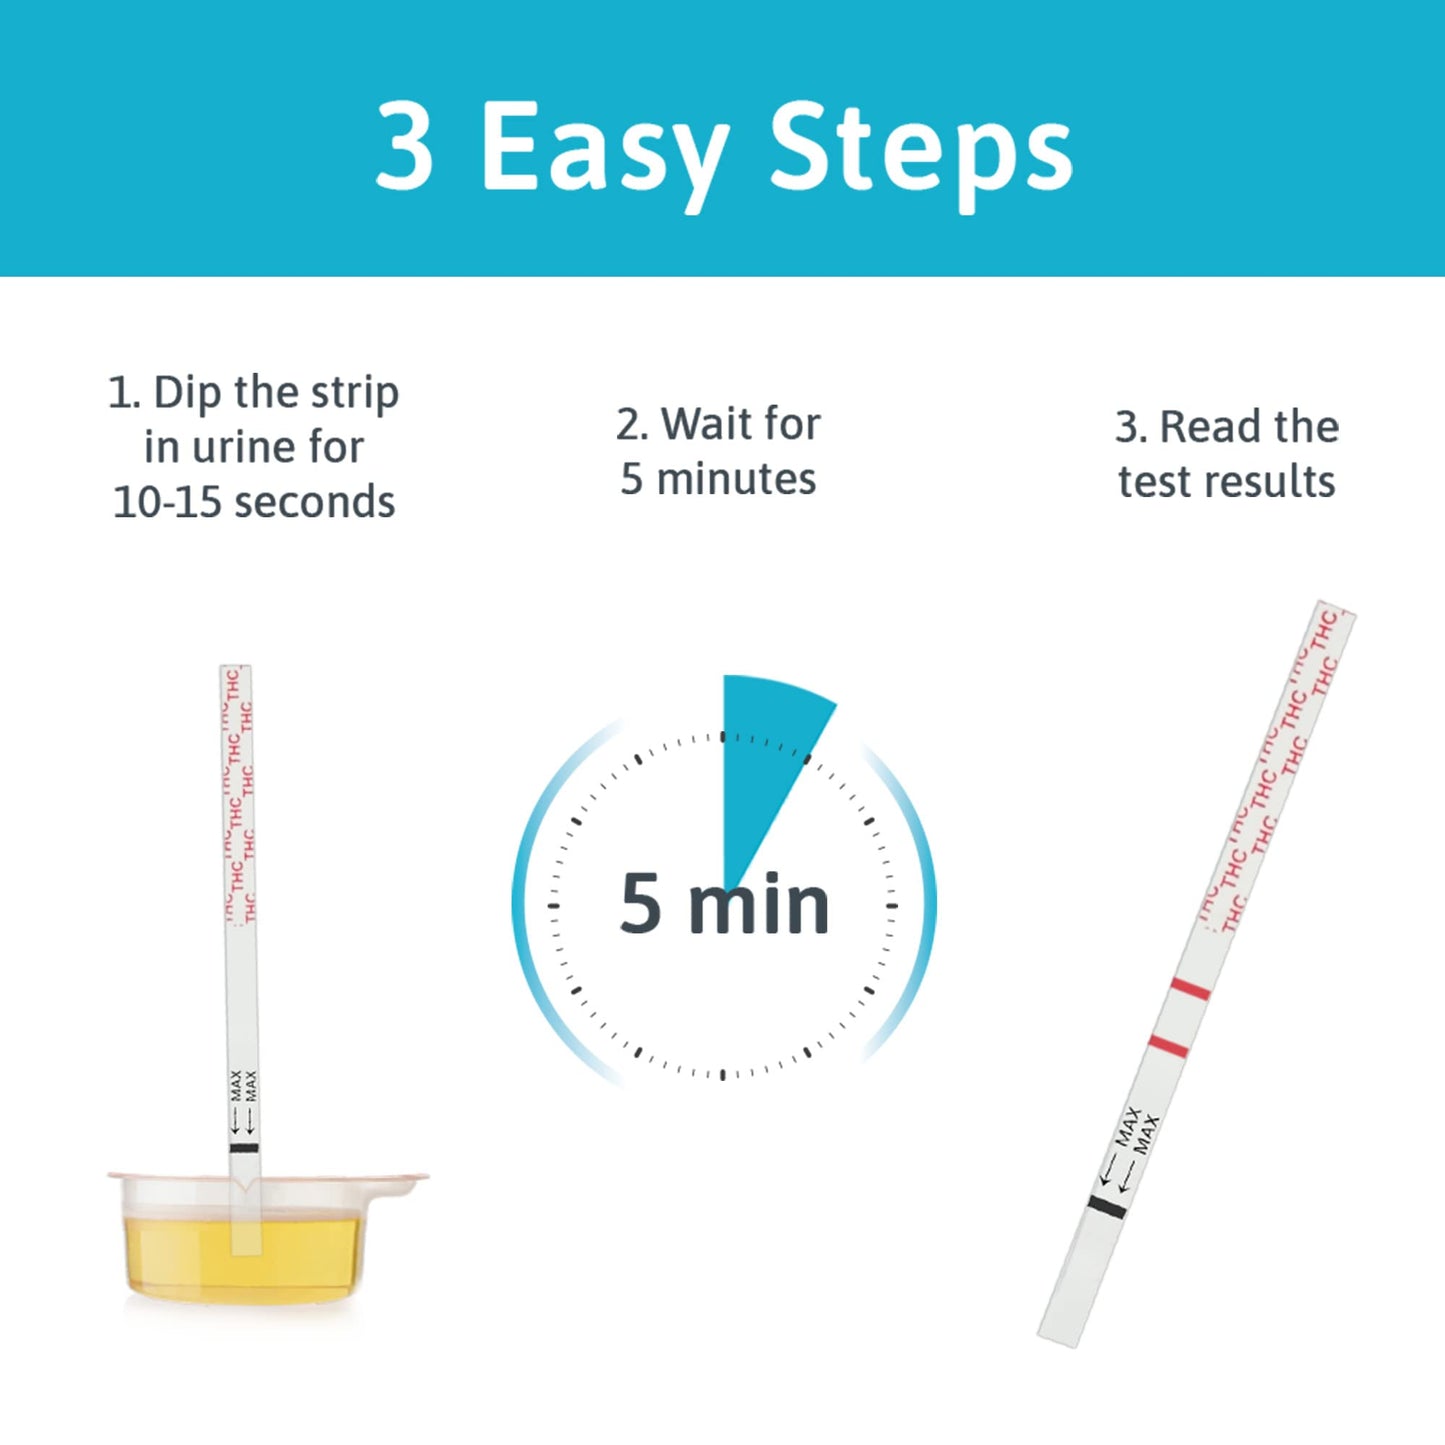 Home Marijuana Urine Drug Test Kit, 10 Strips, 50 ng/ml